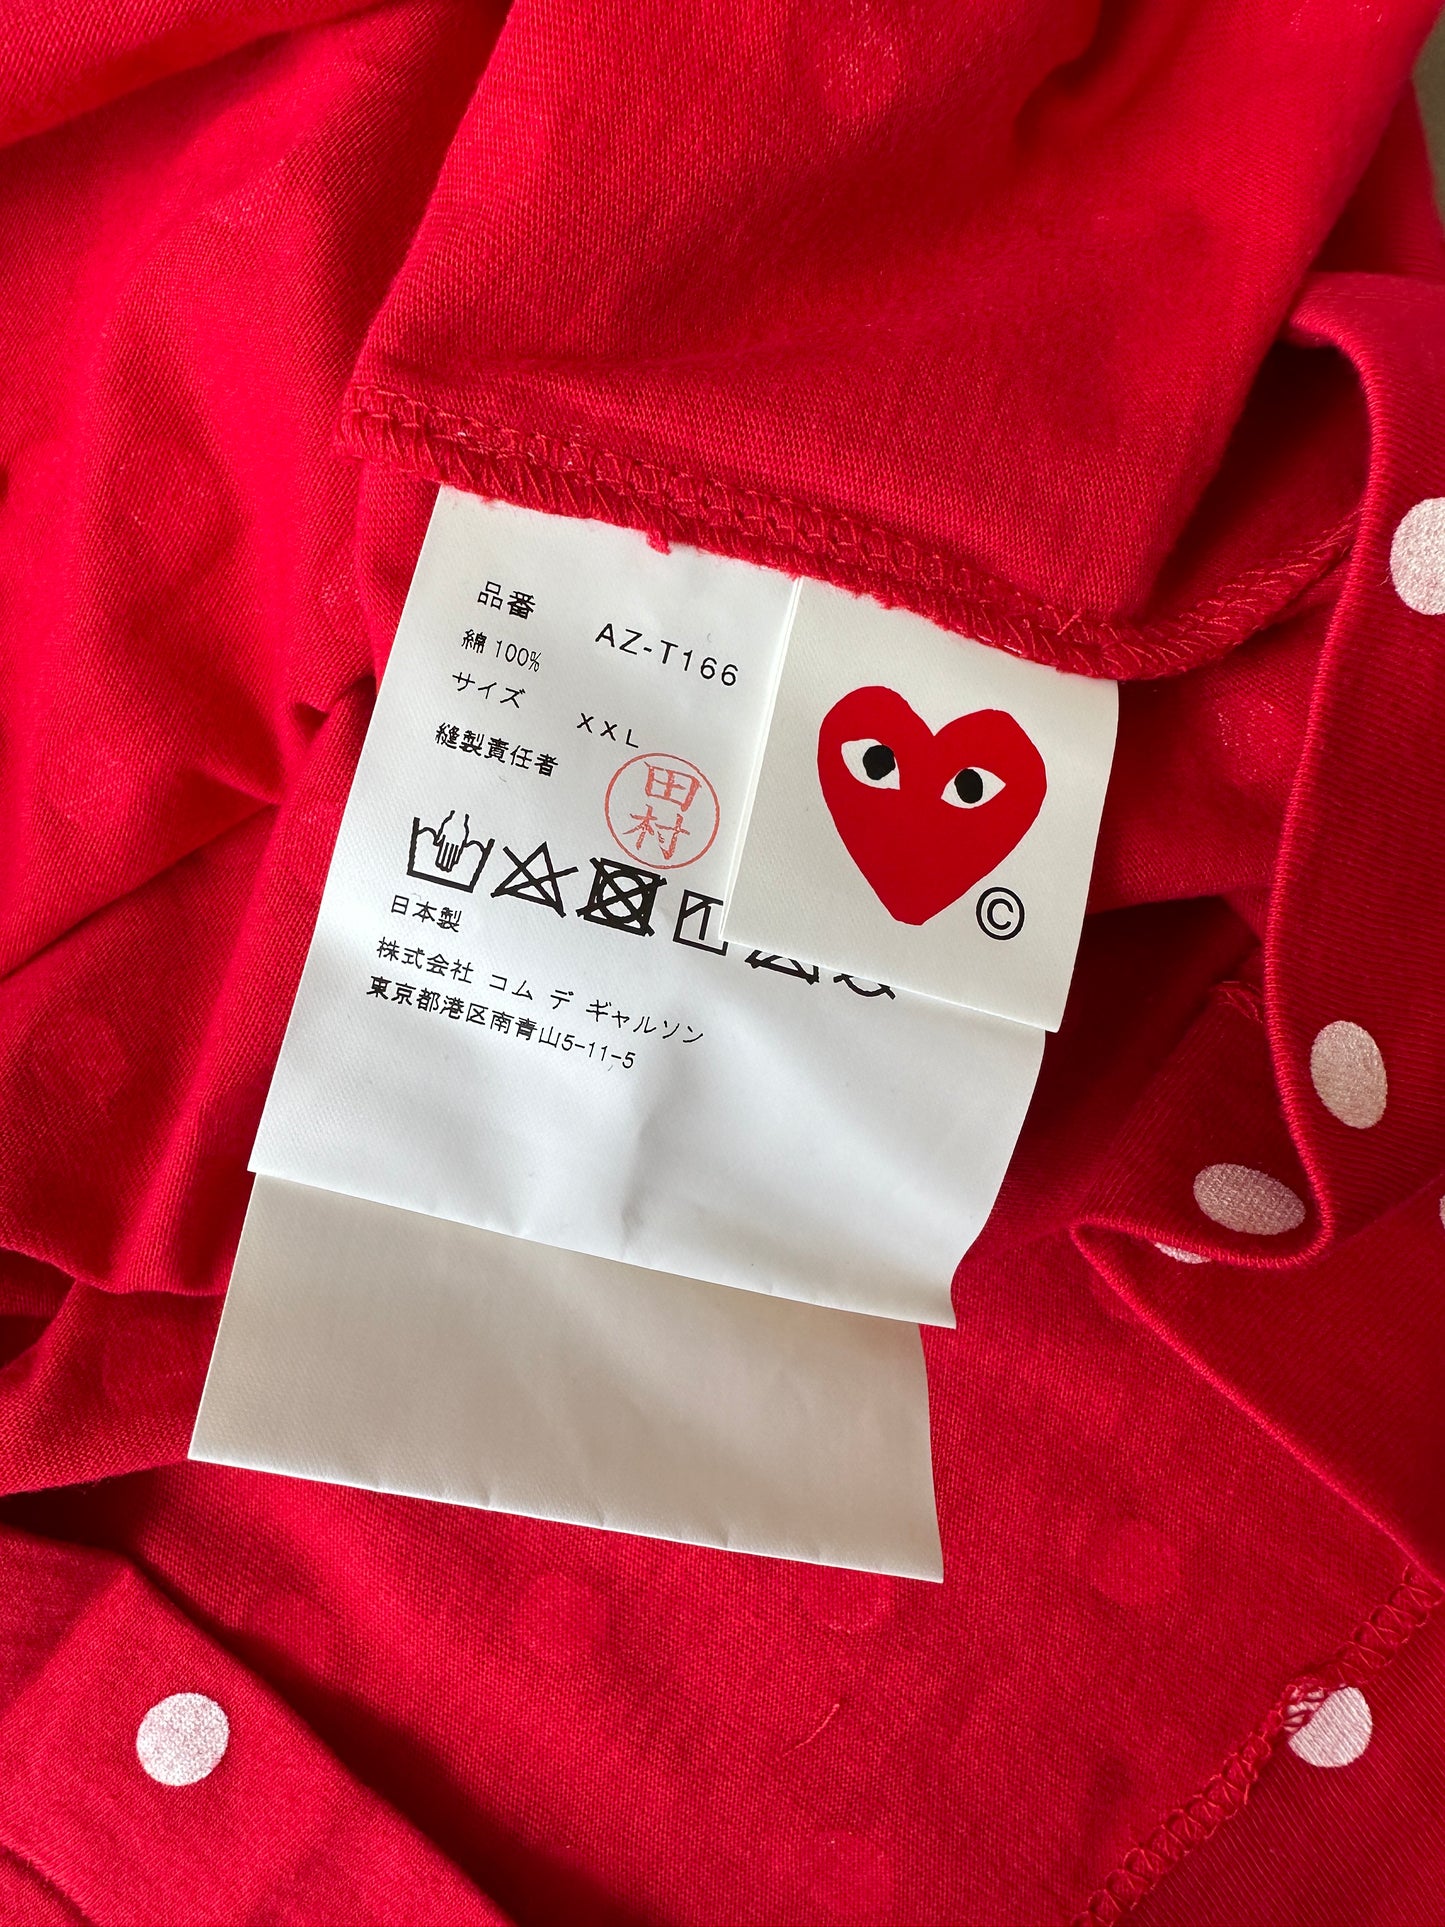 Comme des Garcons PLAY - Red Polka Dot Heart Logo LS T-Shirt